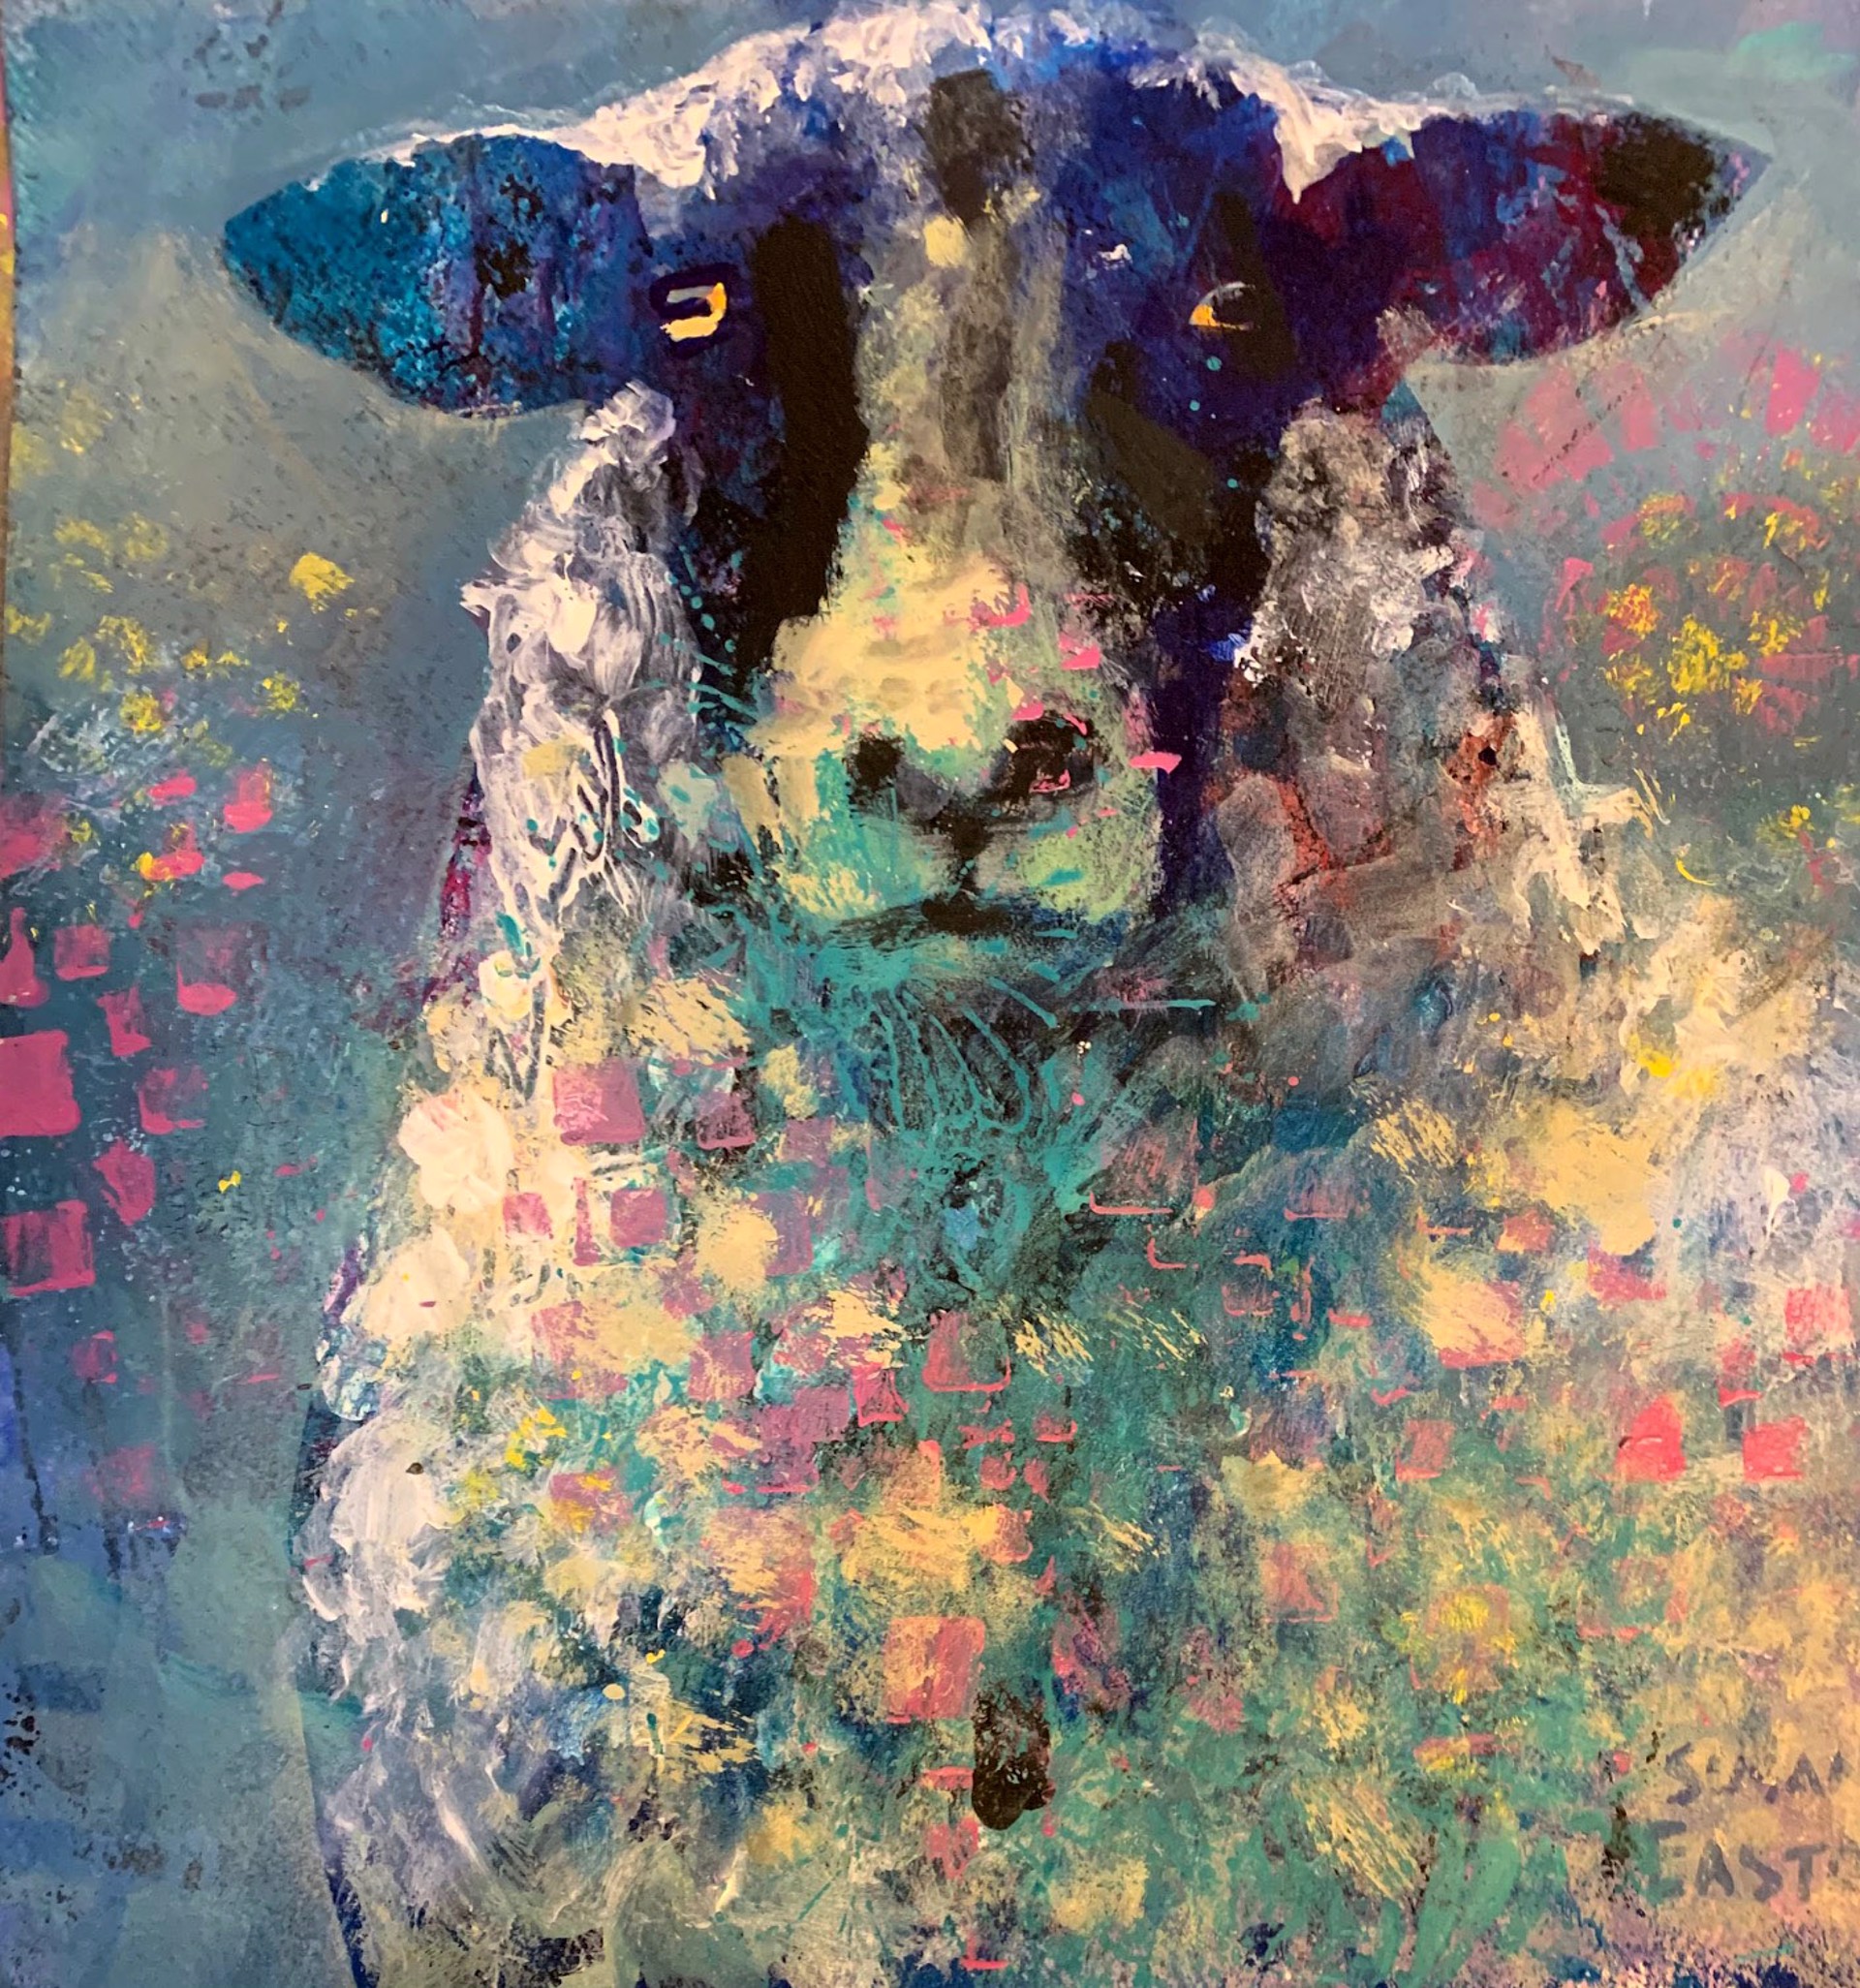 Ewe by Susan Easton Burns